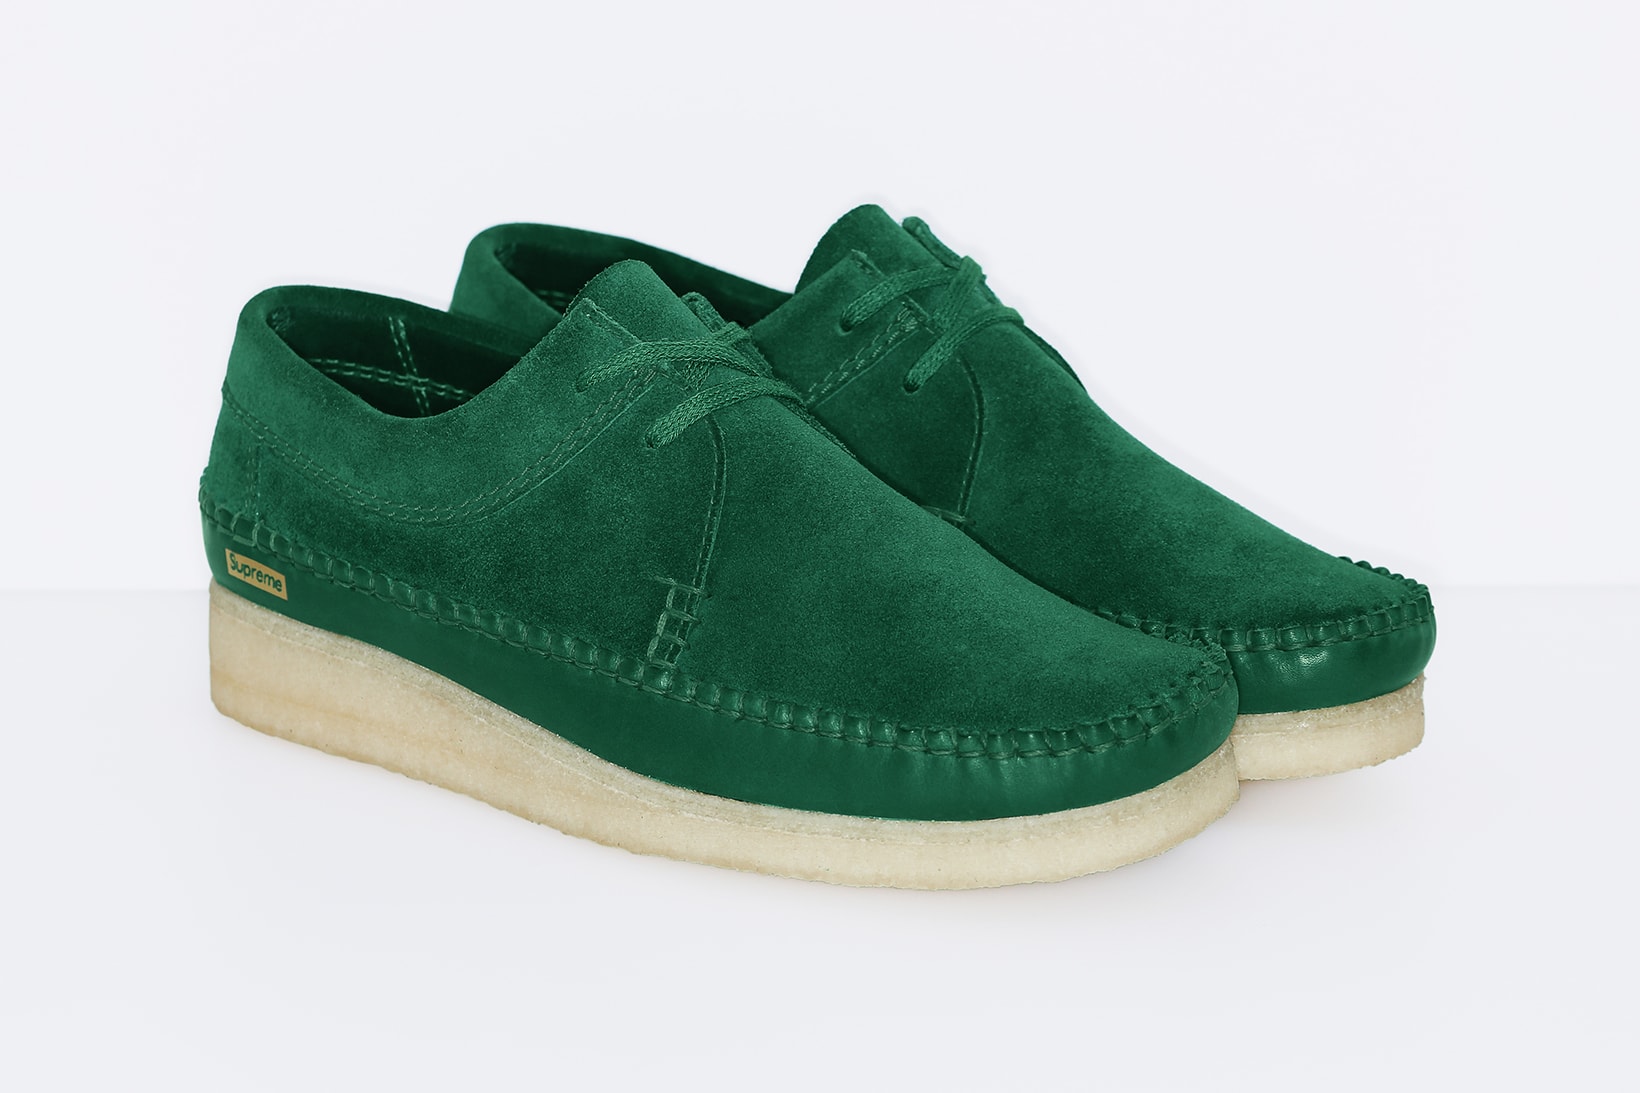 Supreme x Clarks Originals Weaver Shoe Collaboration Green